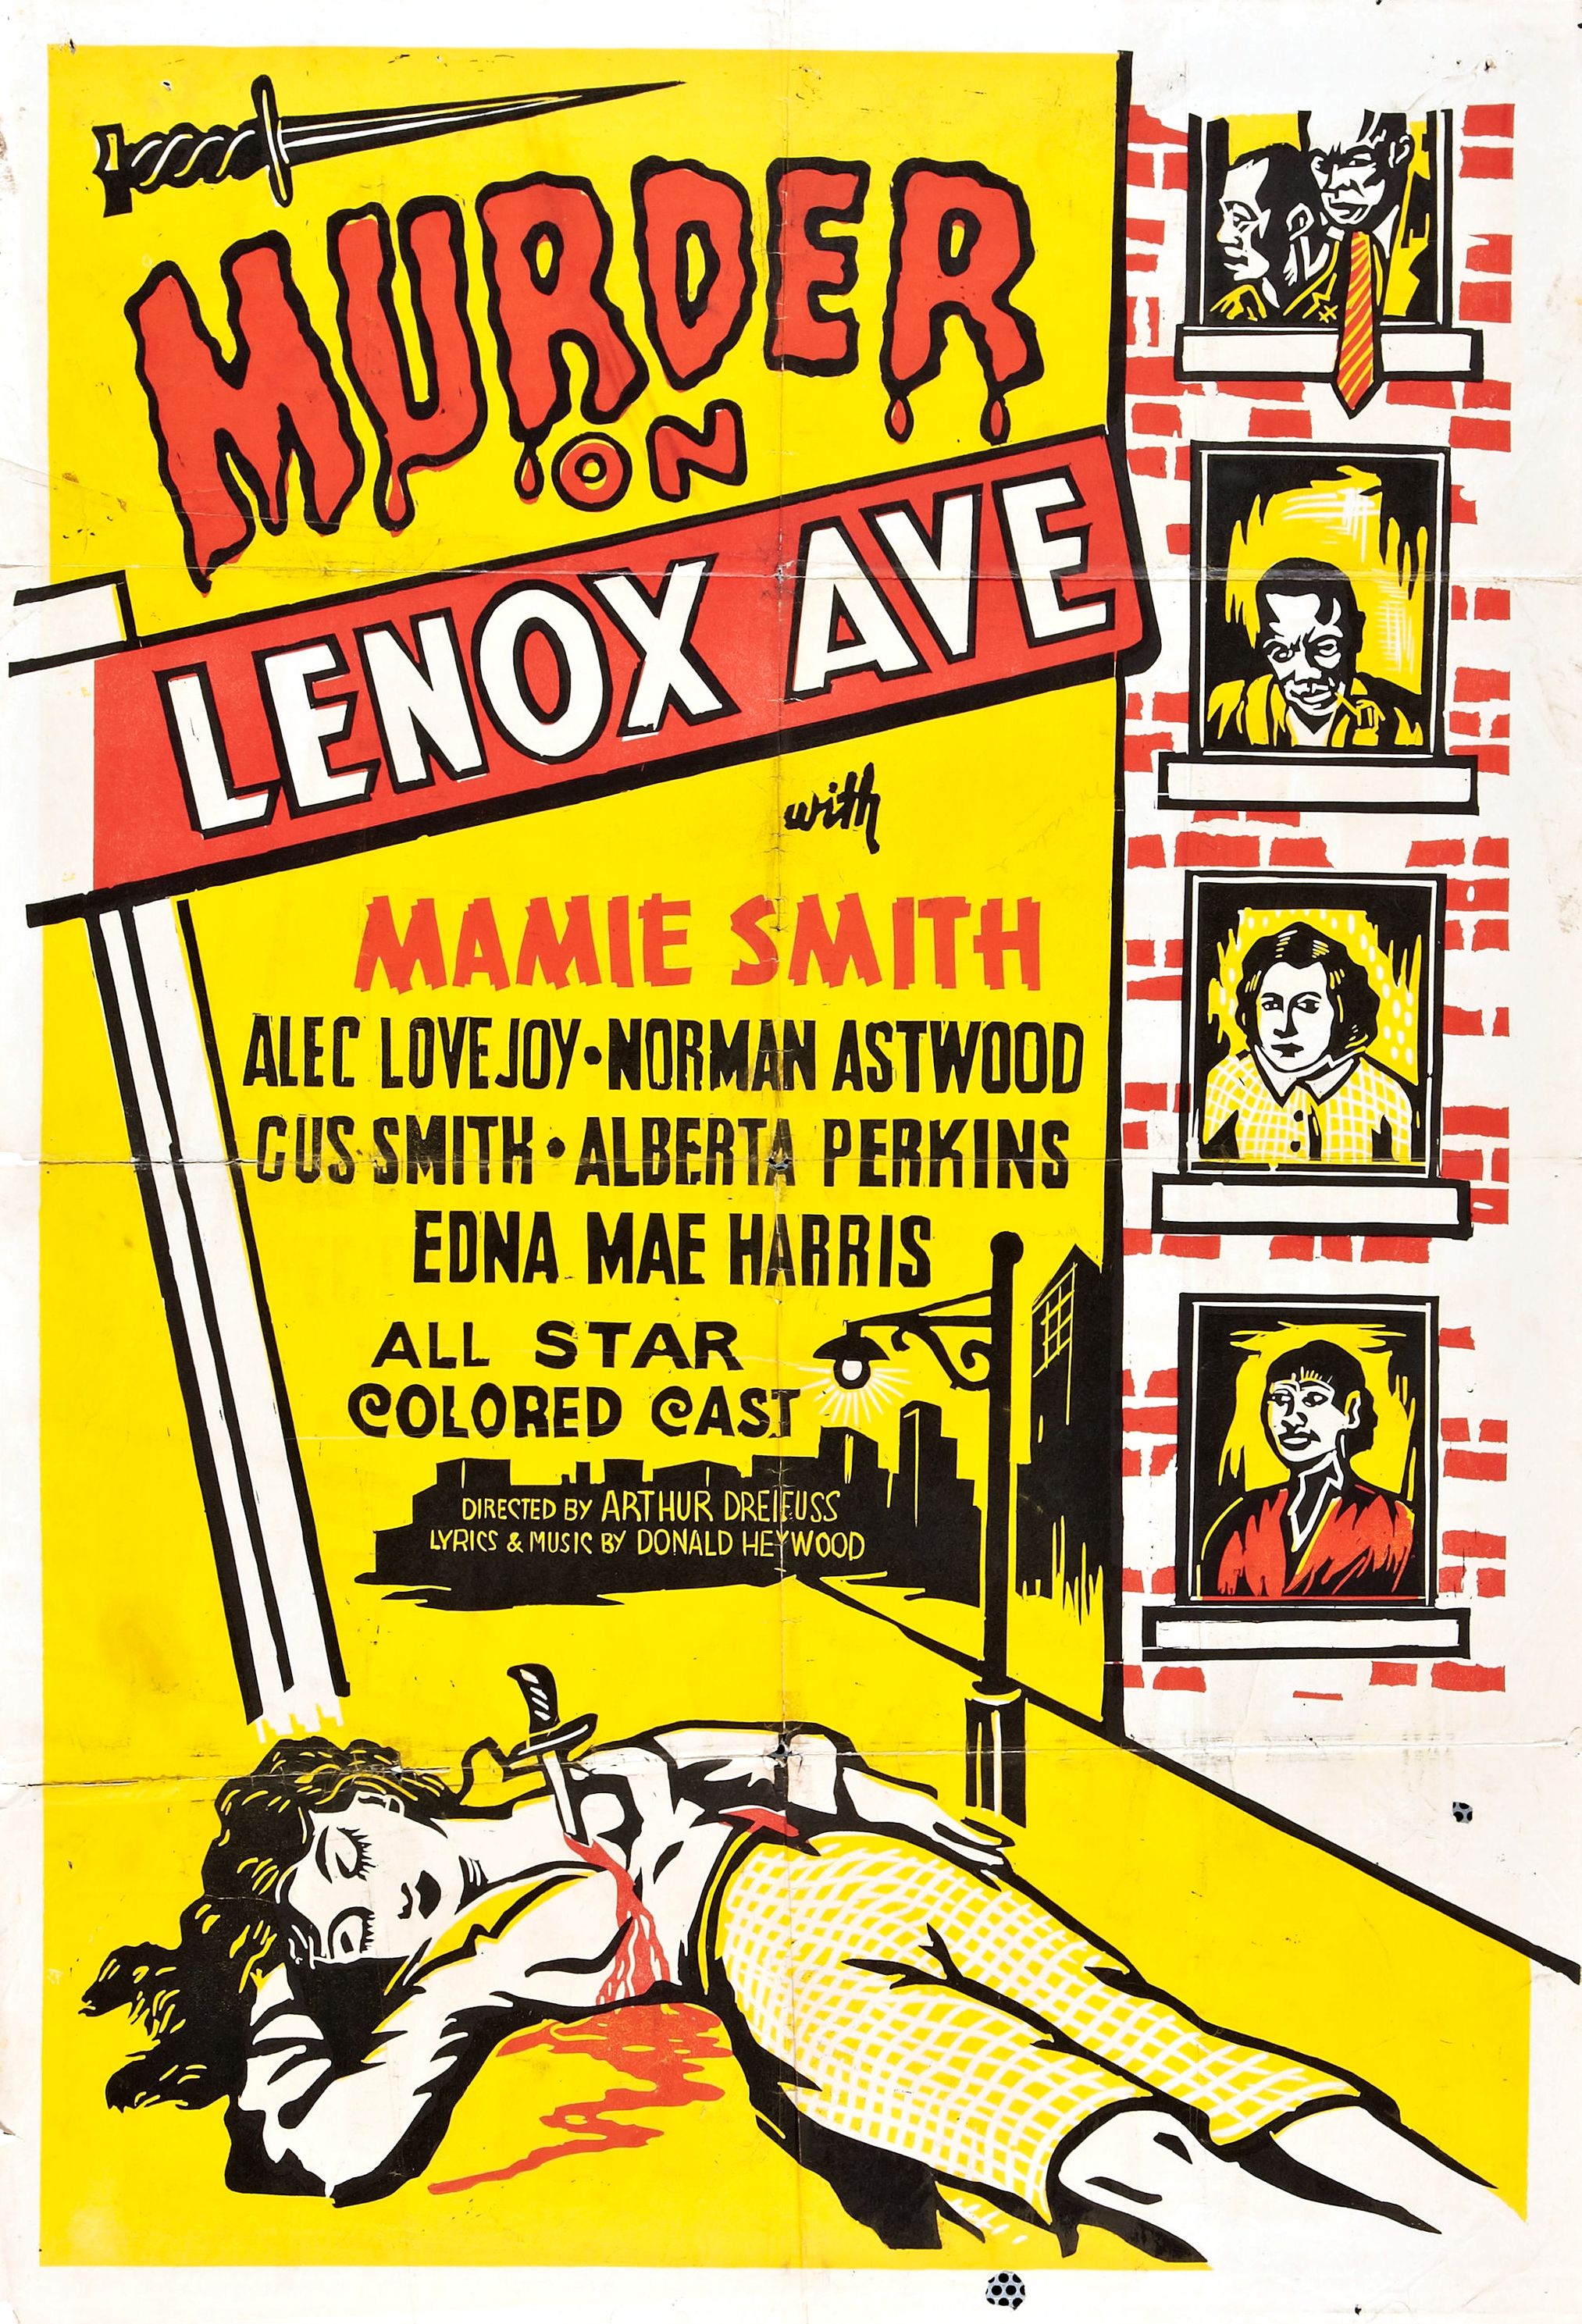 Murder on Lenox Avenue (1941) Screenshot 3 